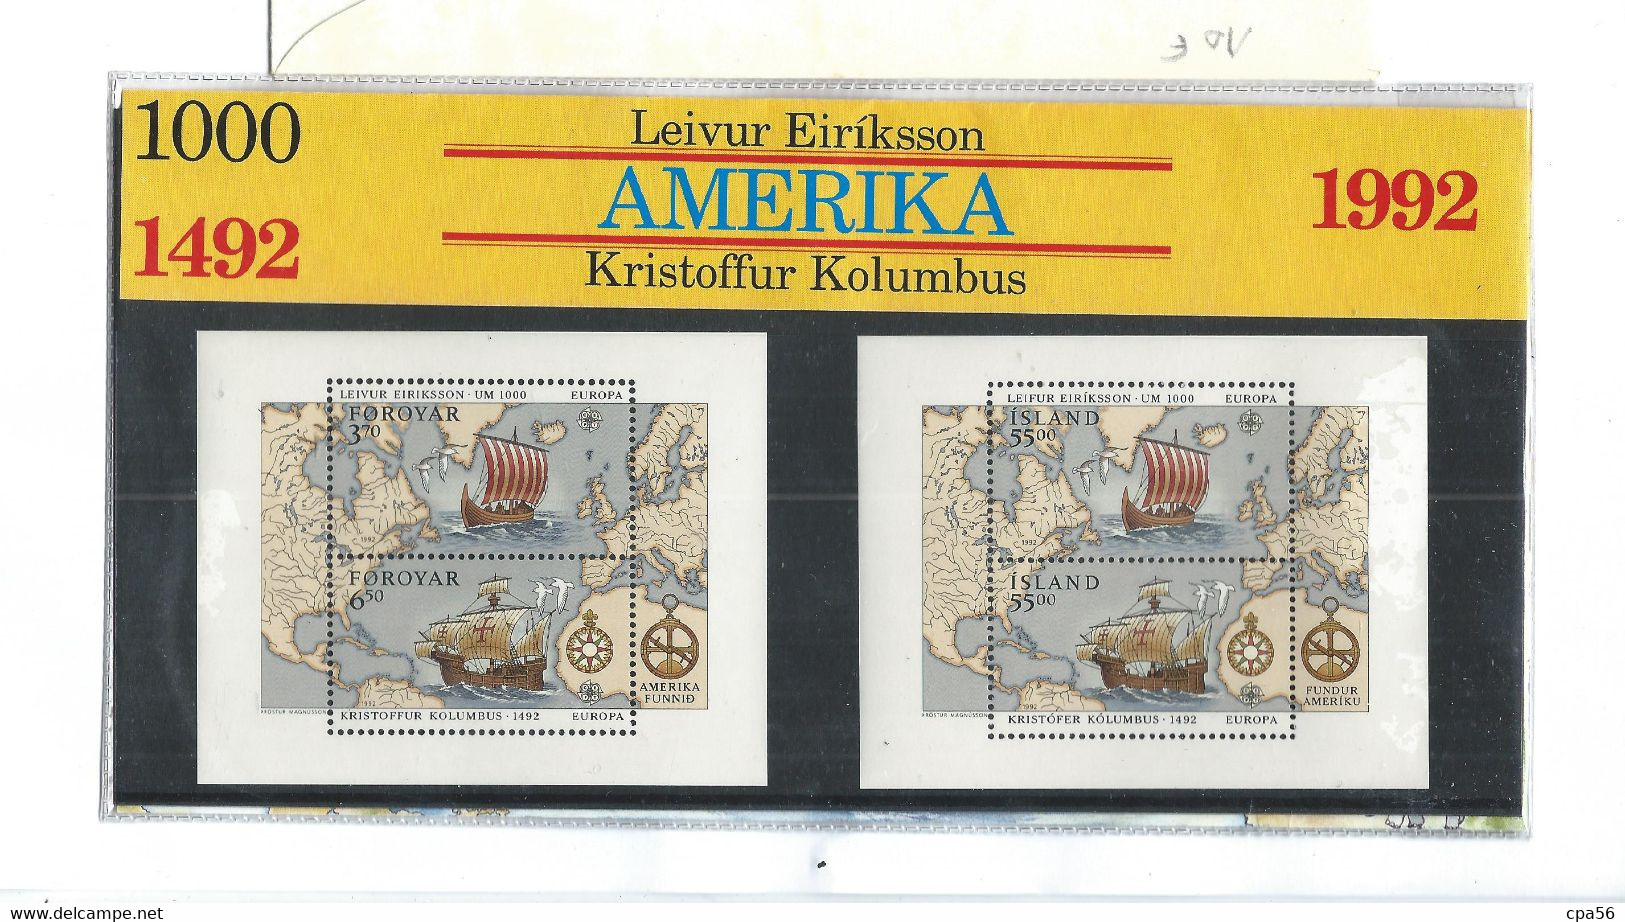 Iceland Island And Faroe Islands 1992 Leivur Eiriksson / Kristoffur Kolumbus Amerika, Folder With Blocs MNH(**) - Ongebruikt